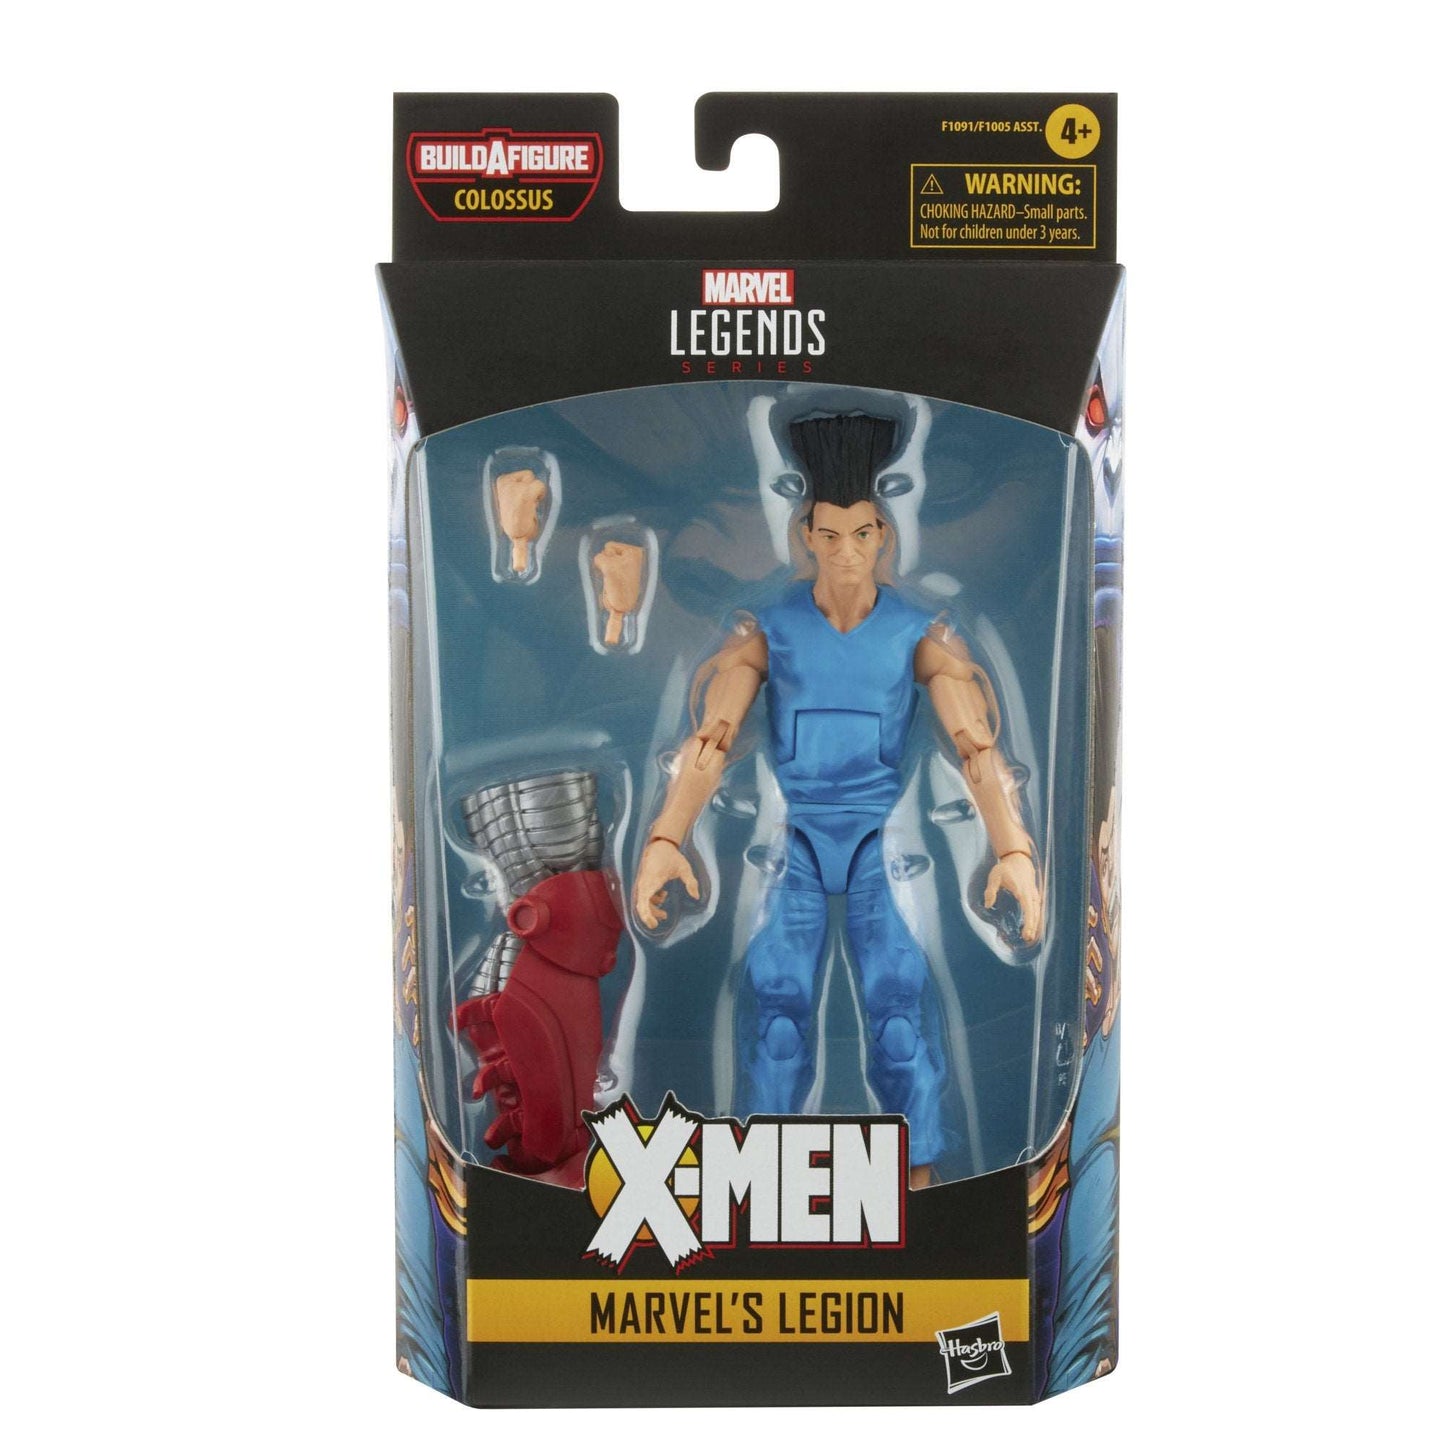 Hasbro Marvel Legends Series X-men Age of Apocalypse Legion figure in packaging front of box